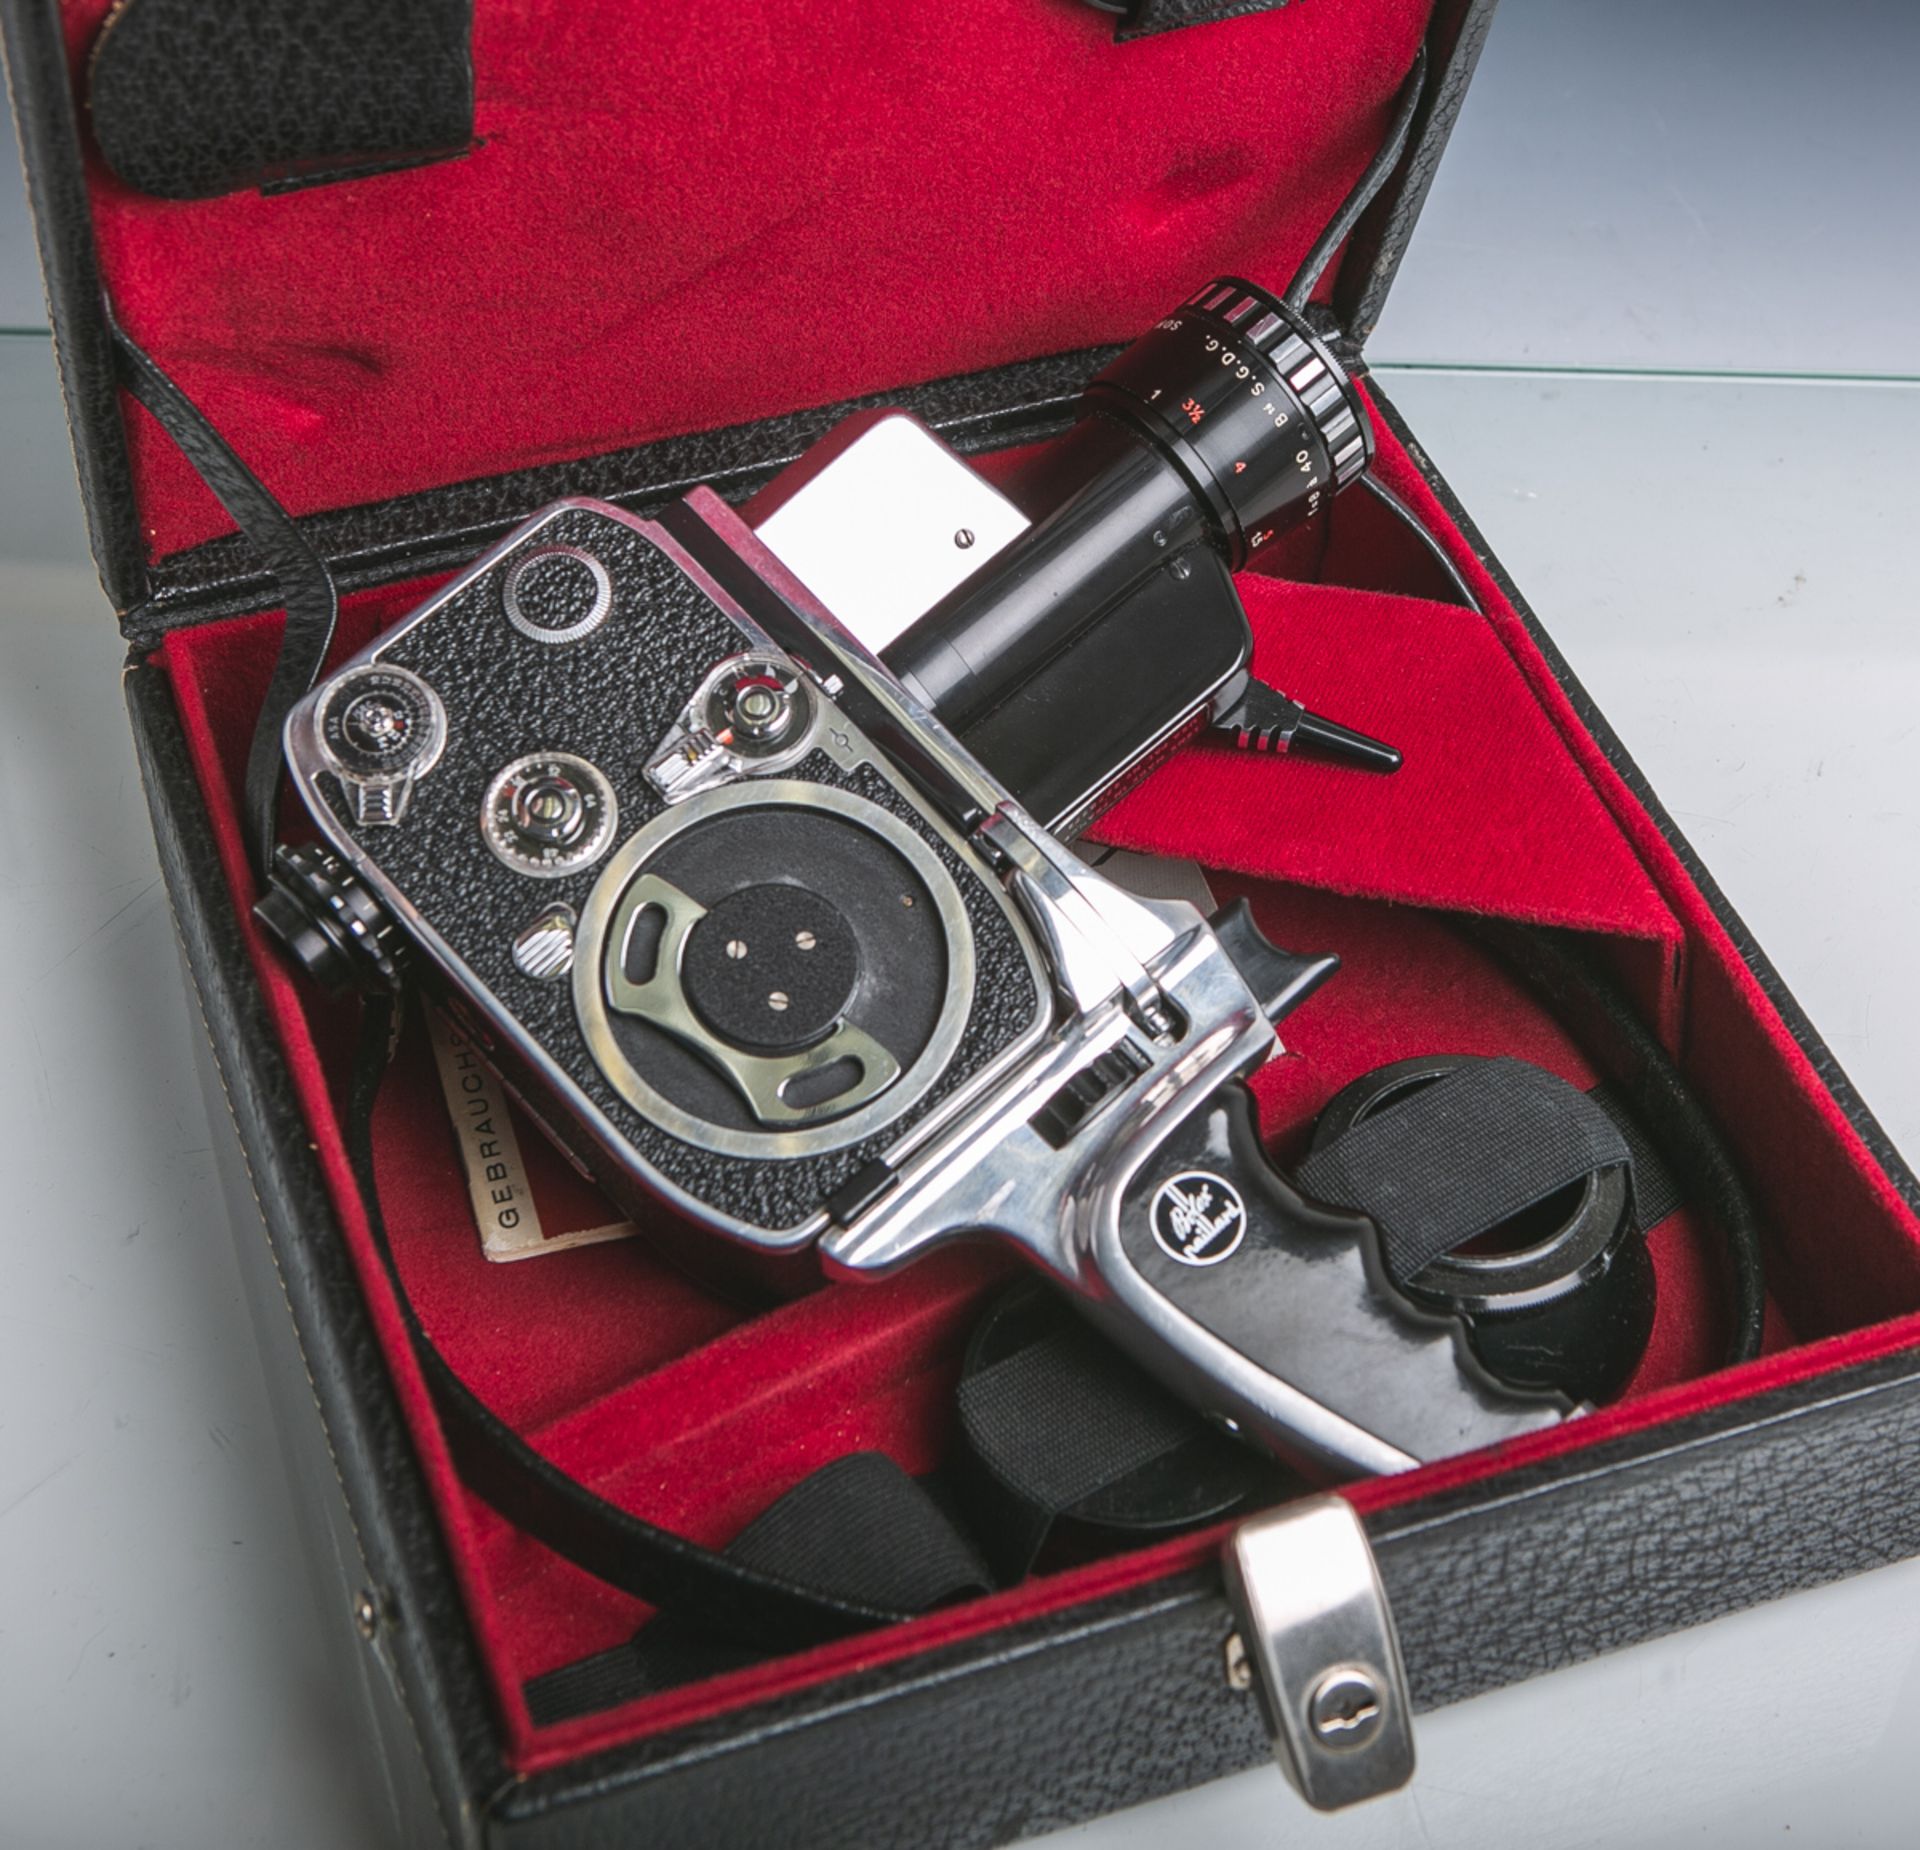 Bolex Paillard-Filmkamera (Schweiz, Bauzeit 1962-1964), Modell "Bolex Zoom Reflex P1",